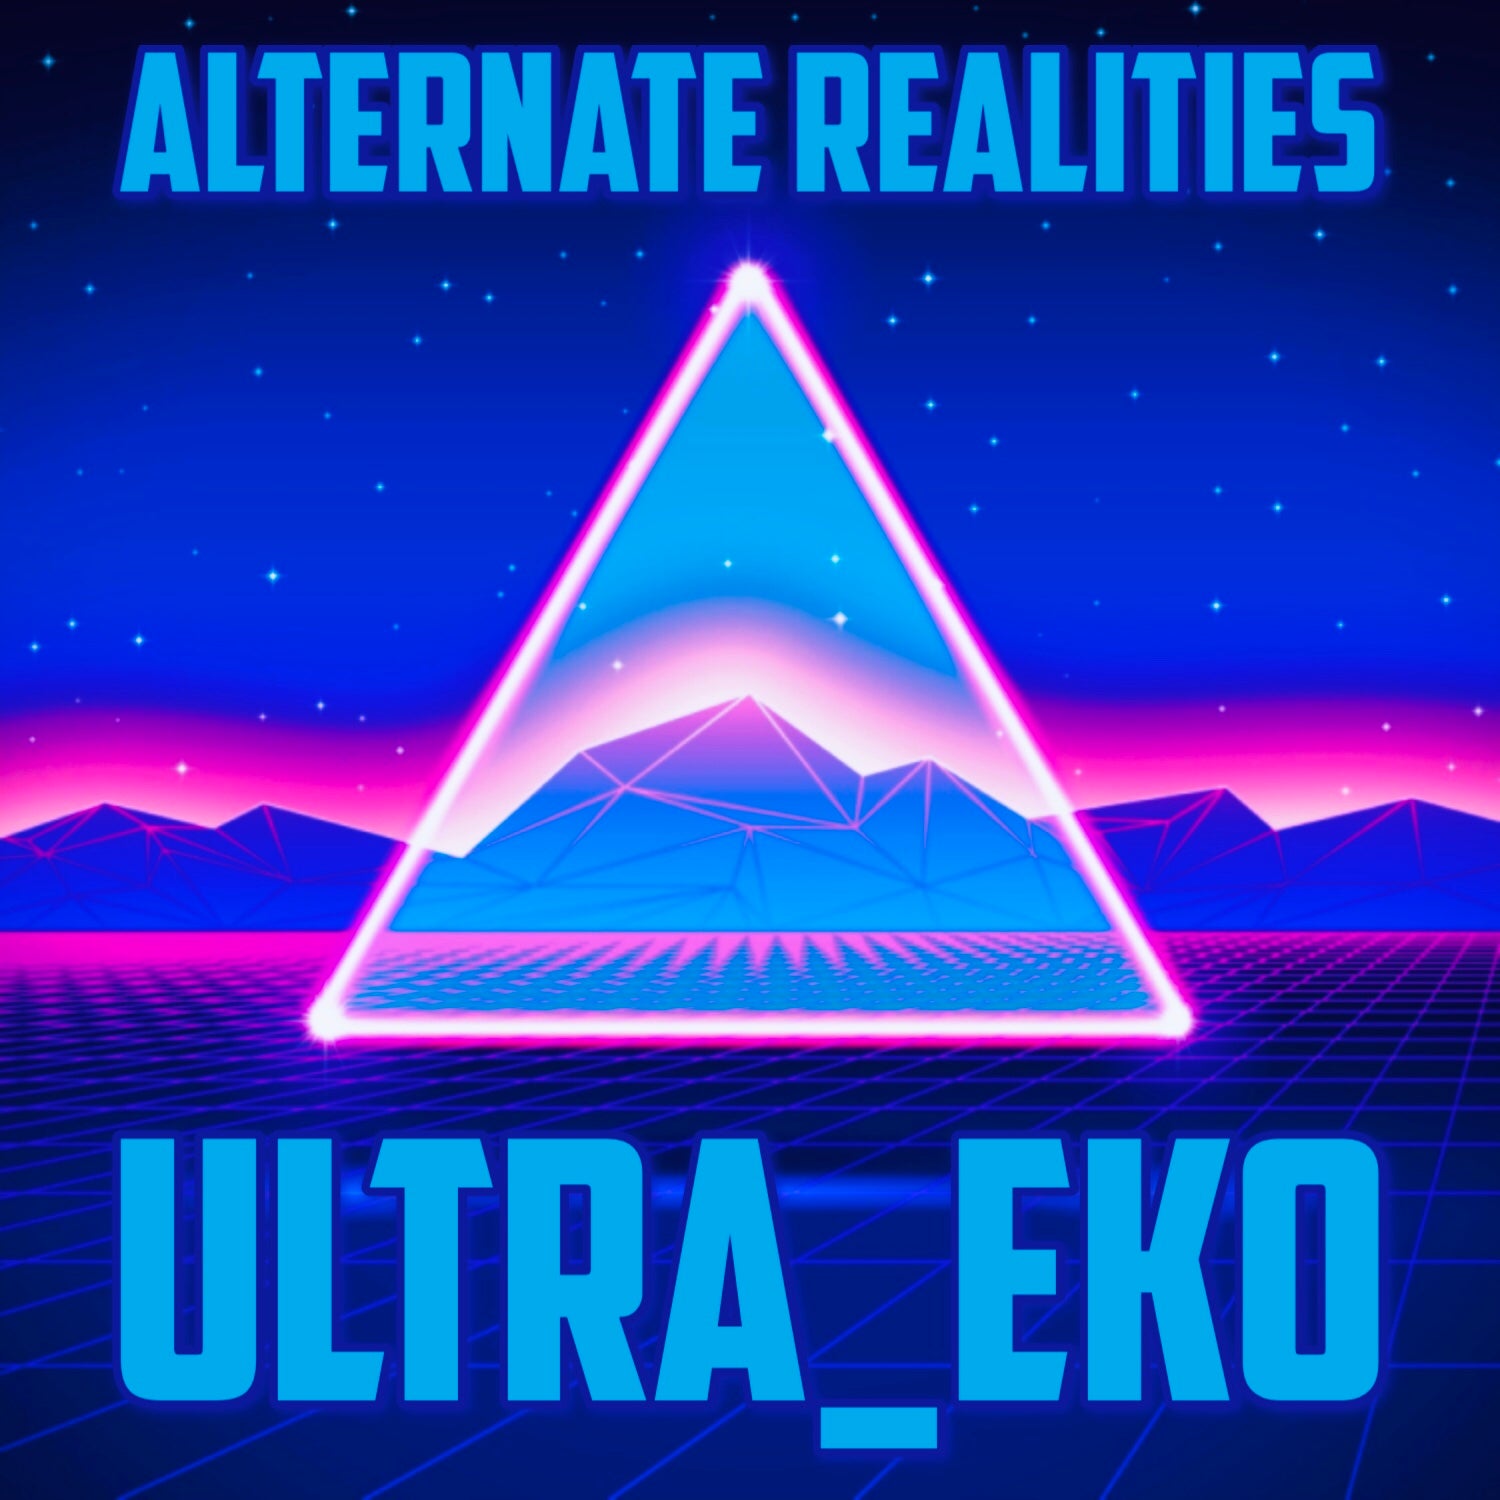 Ultra_eko – ‘Alternate Realities’